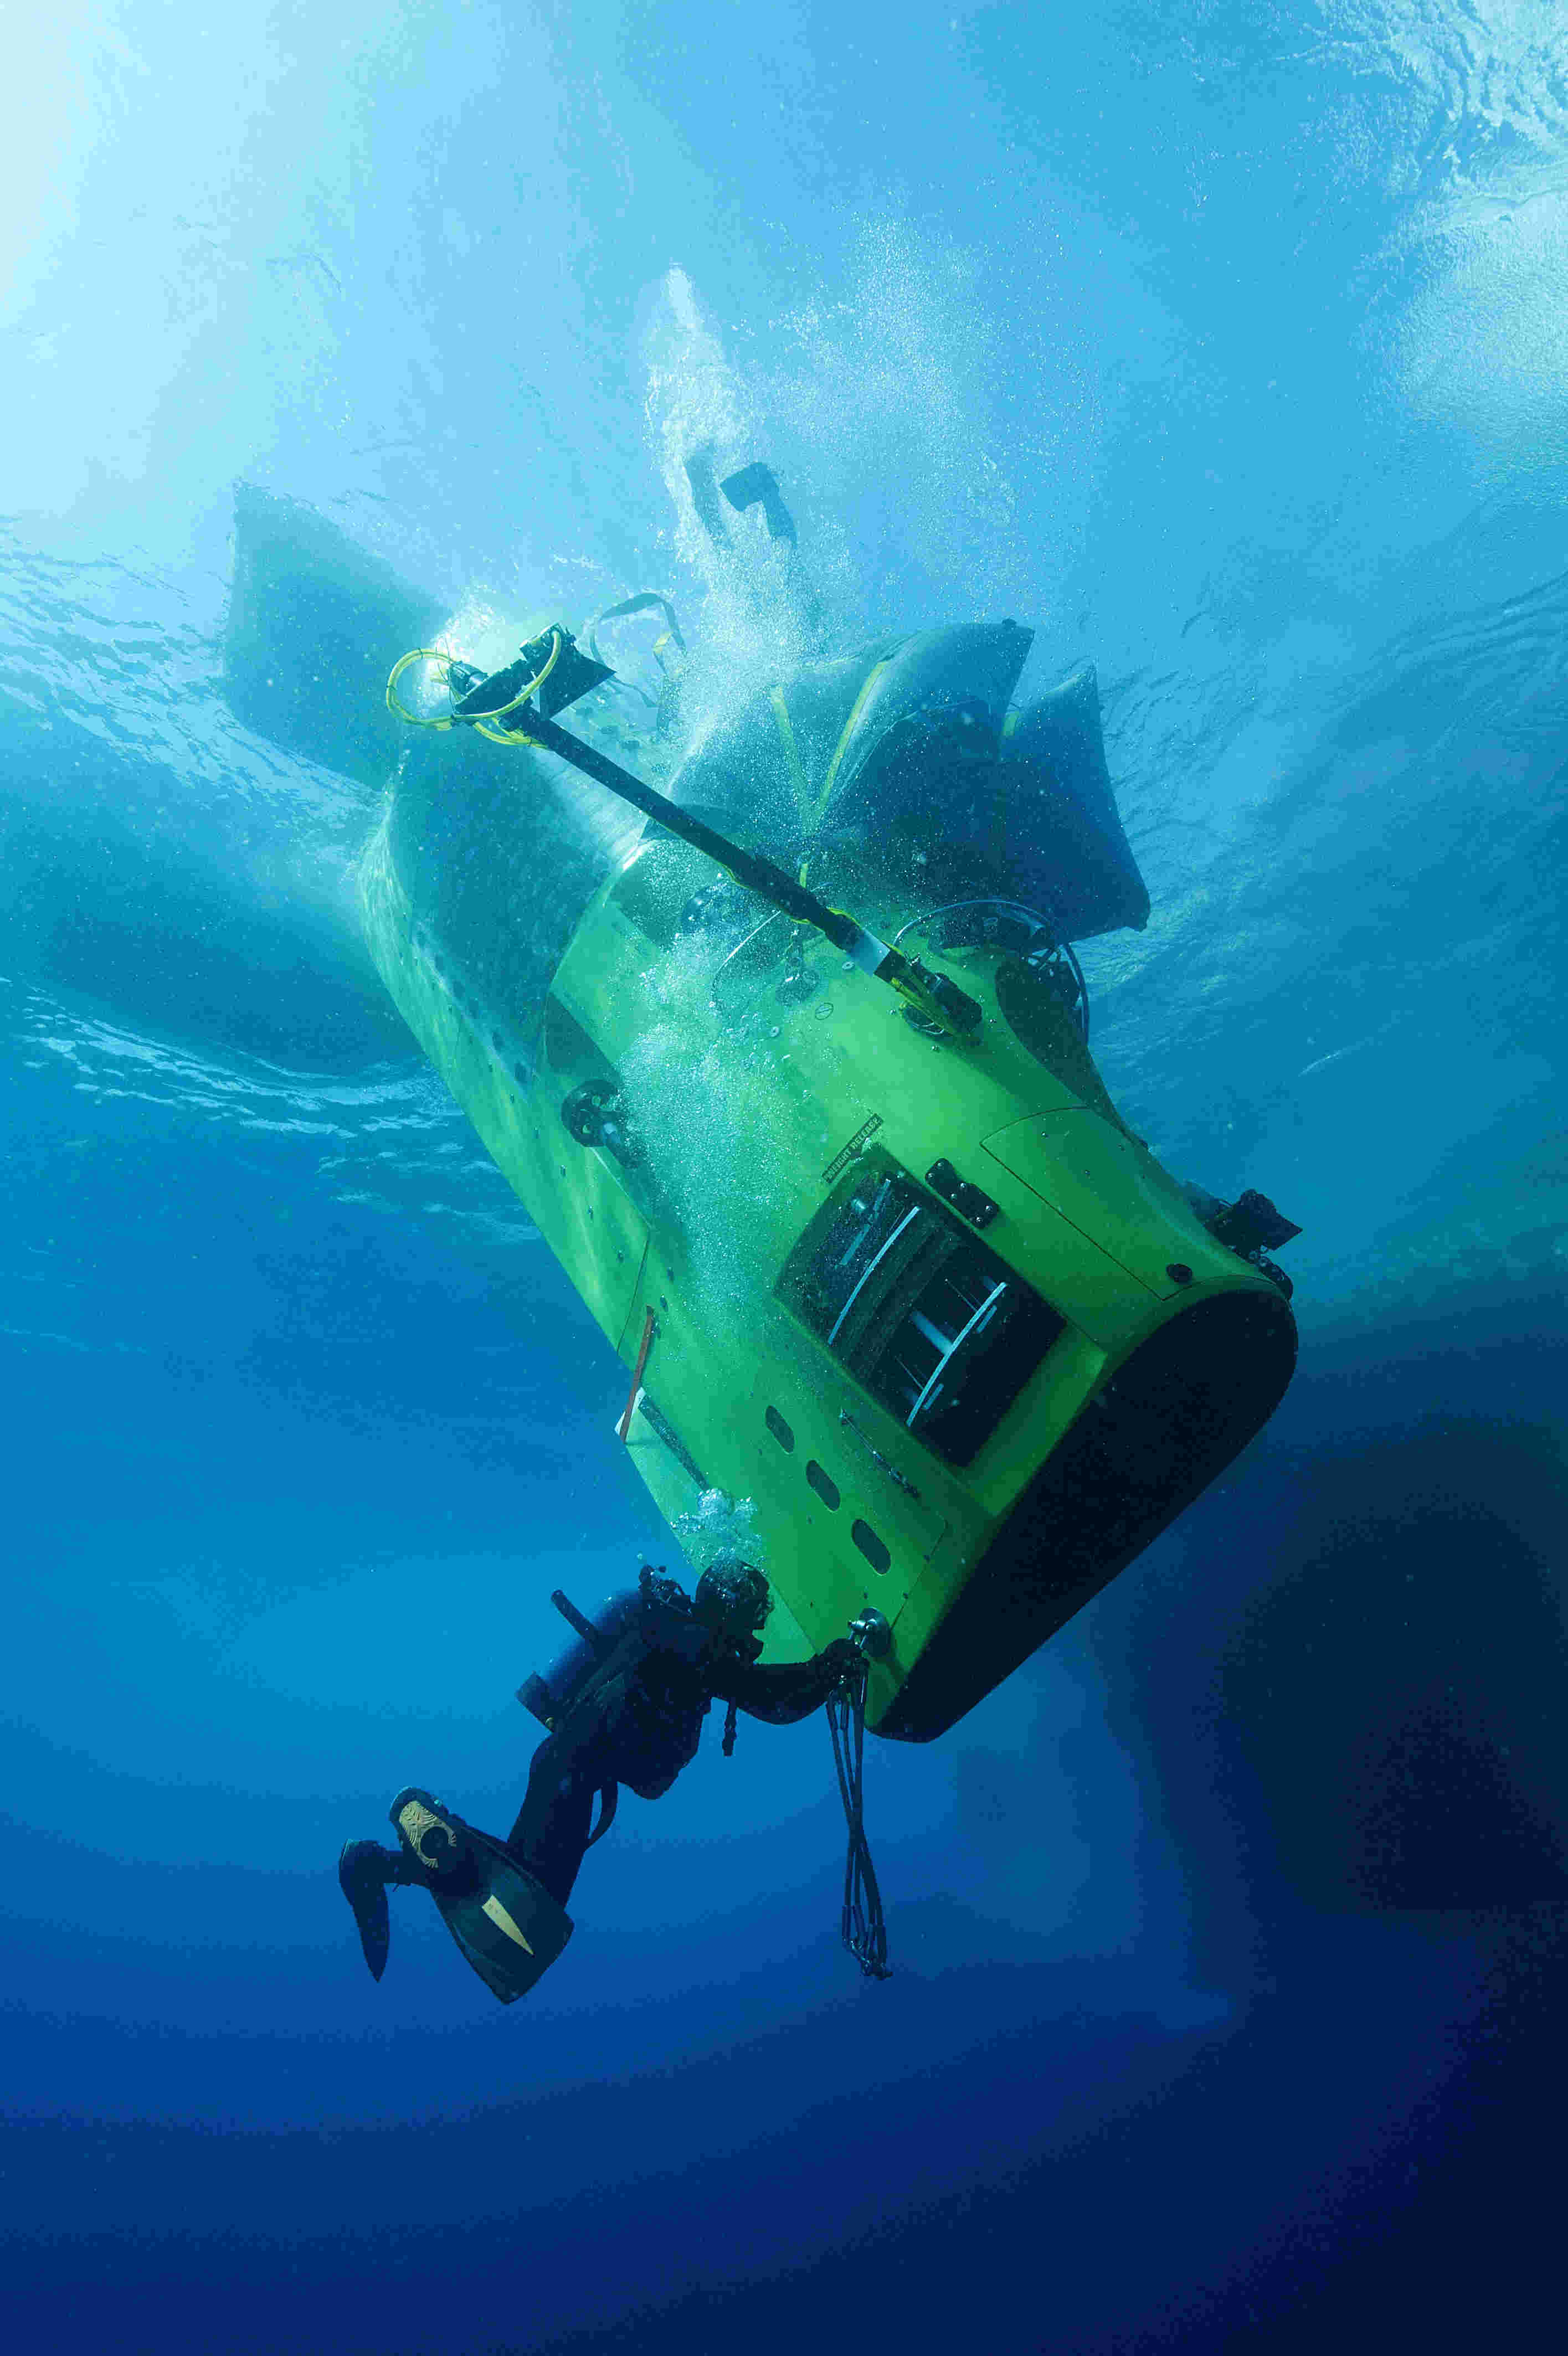 James Cameron's Deepsea Challenger Submarine Model, Page 2